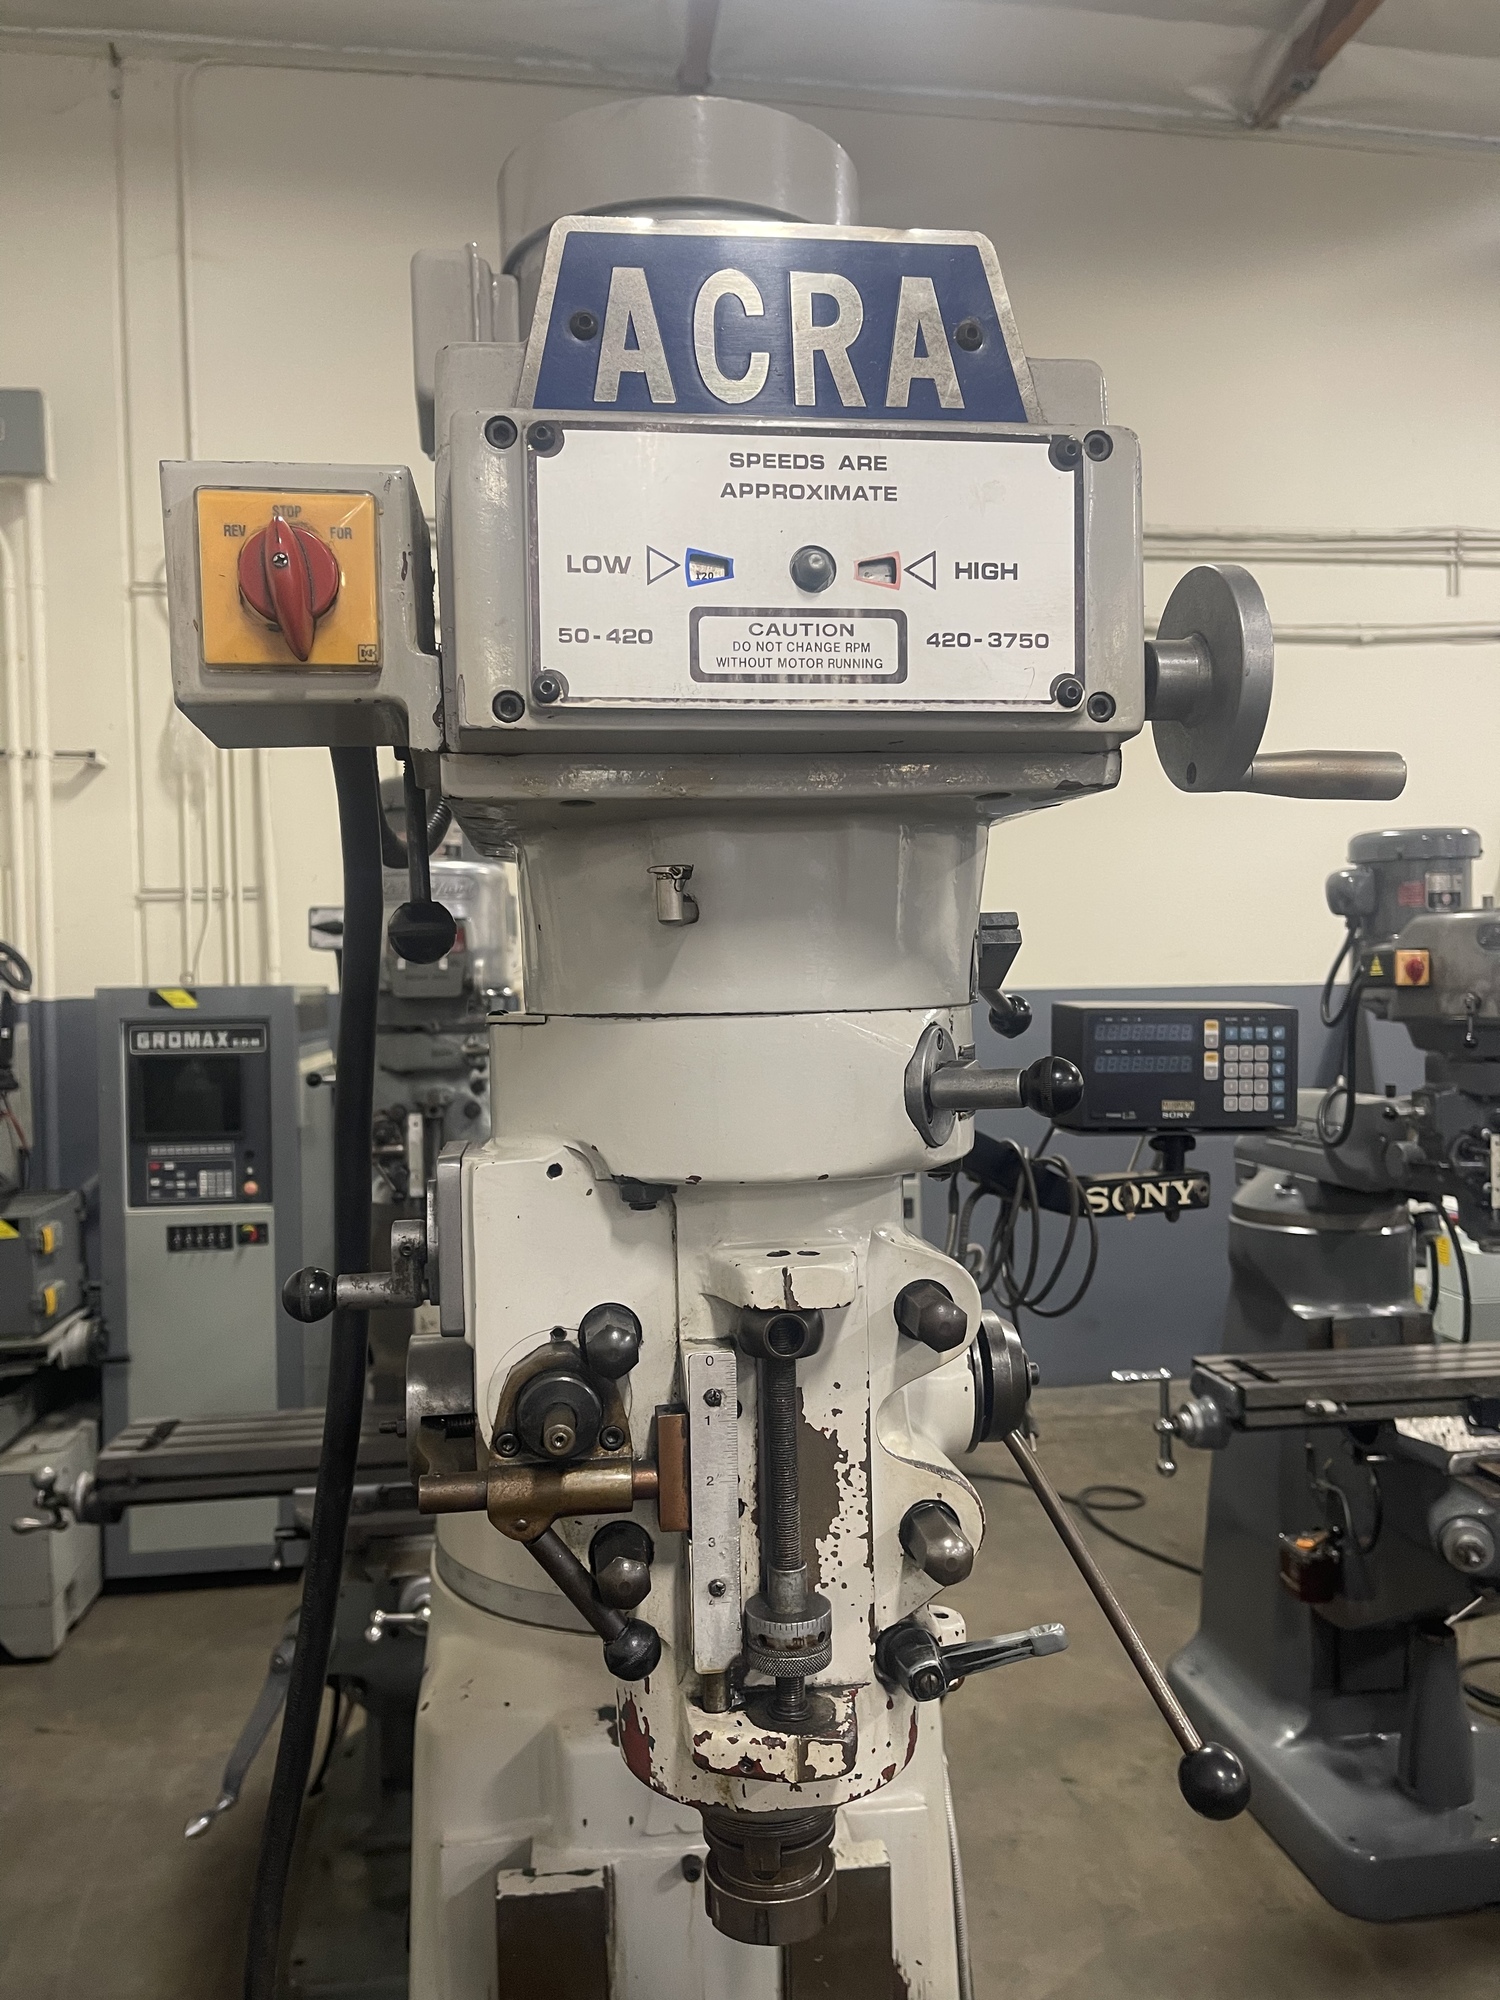 ACRA 1054-3V Vertical Mills | PM Machines